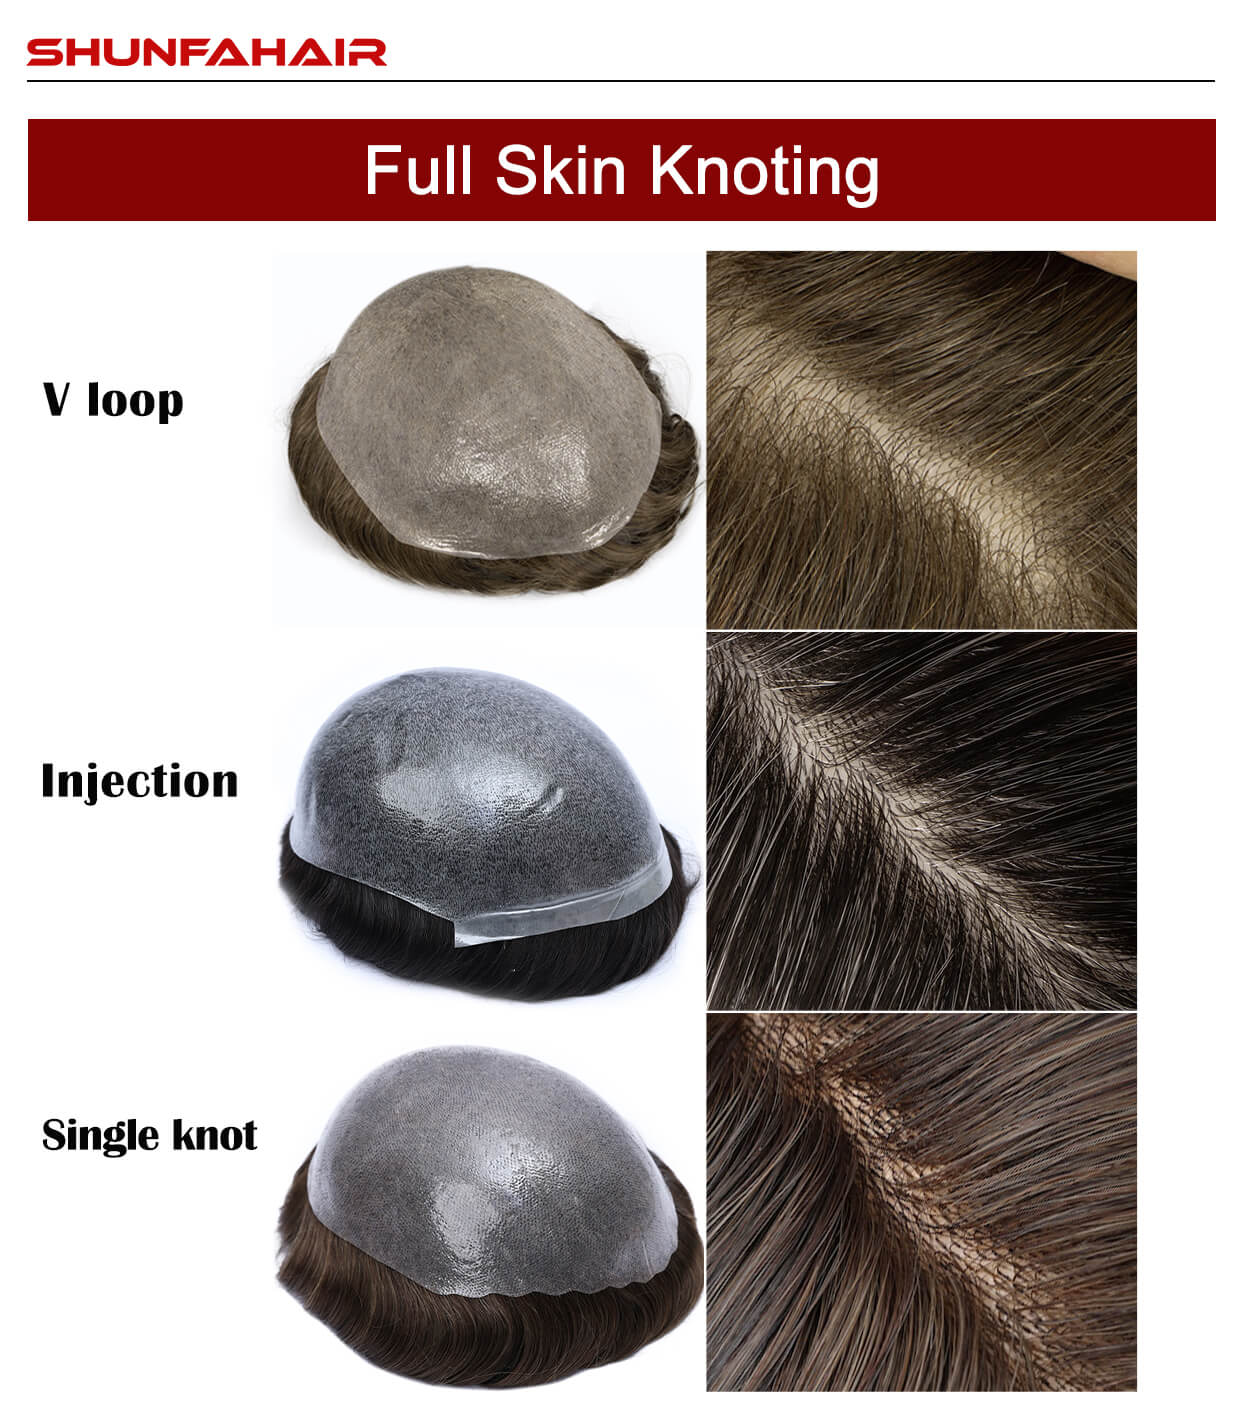 Full skin men hair replacement knotting.jpg